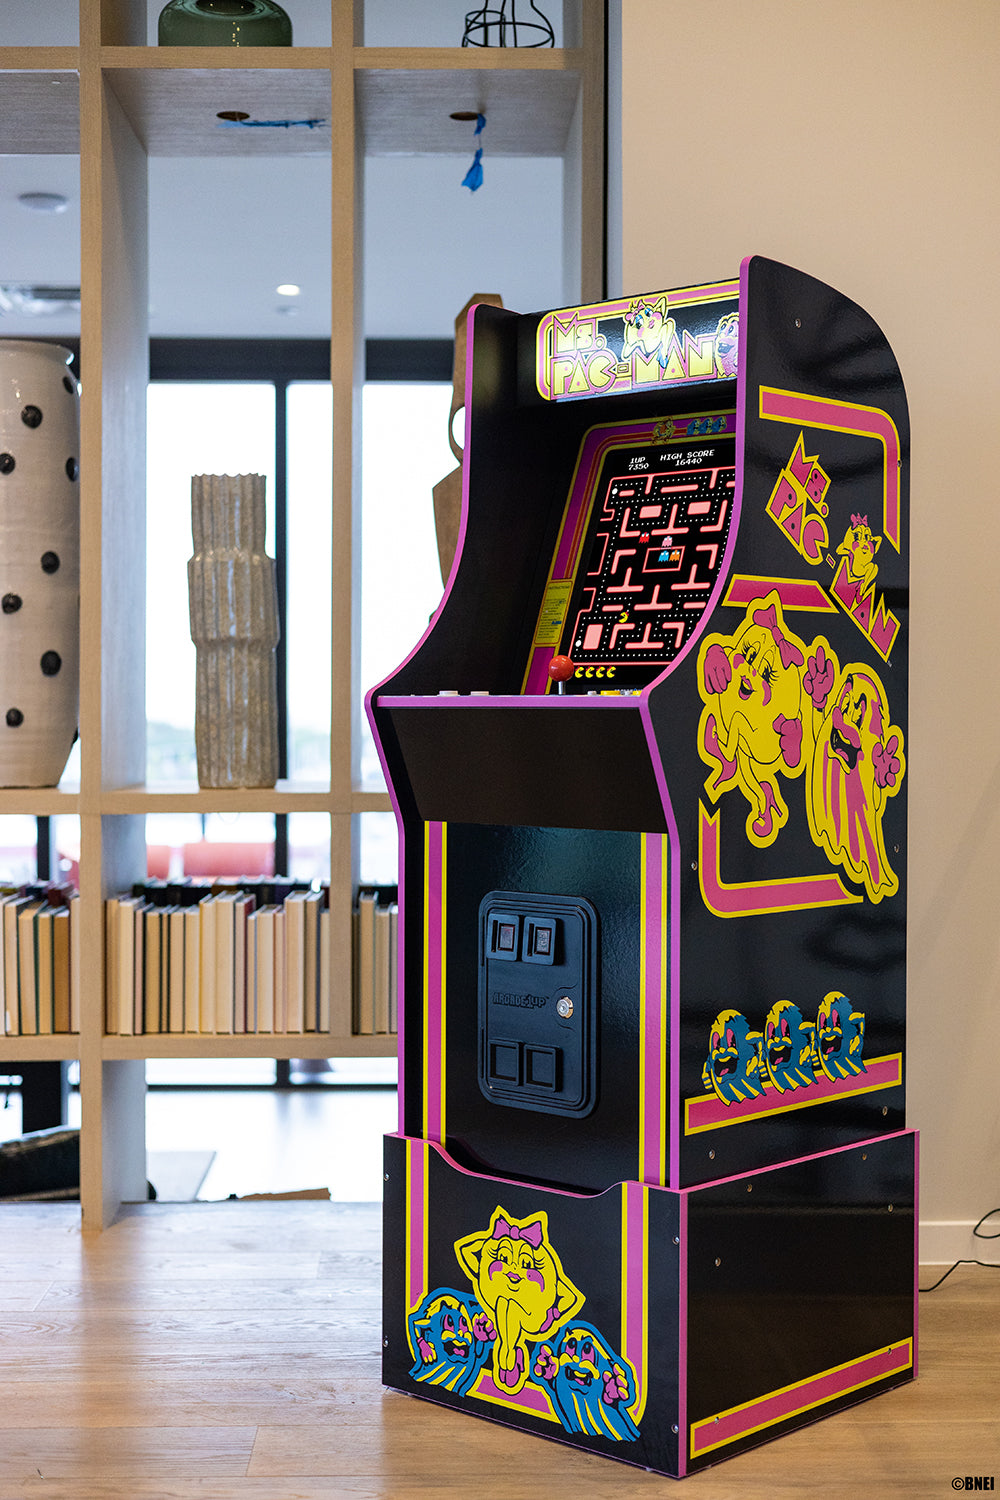 ARCADE1UP Ms Pac-Man Edition Retro Arcade Game